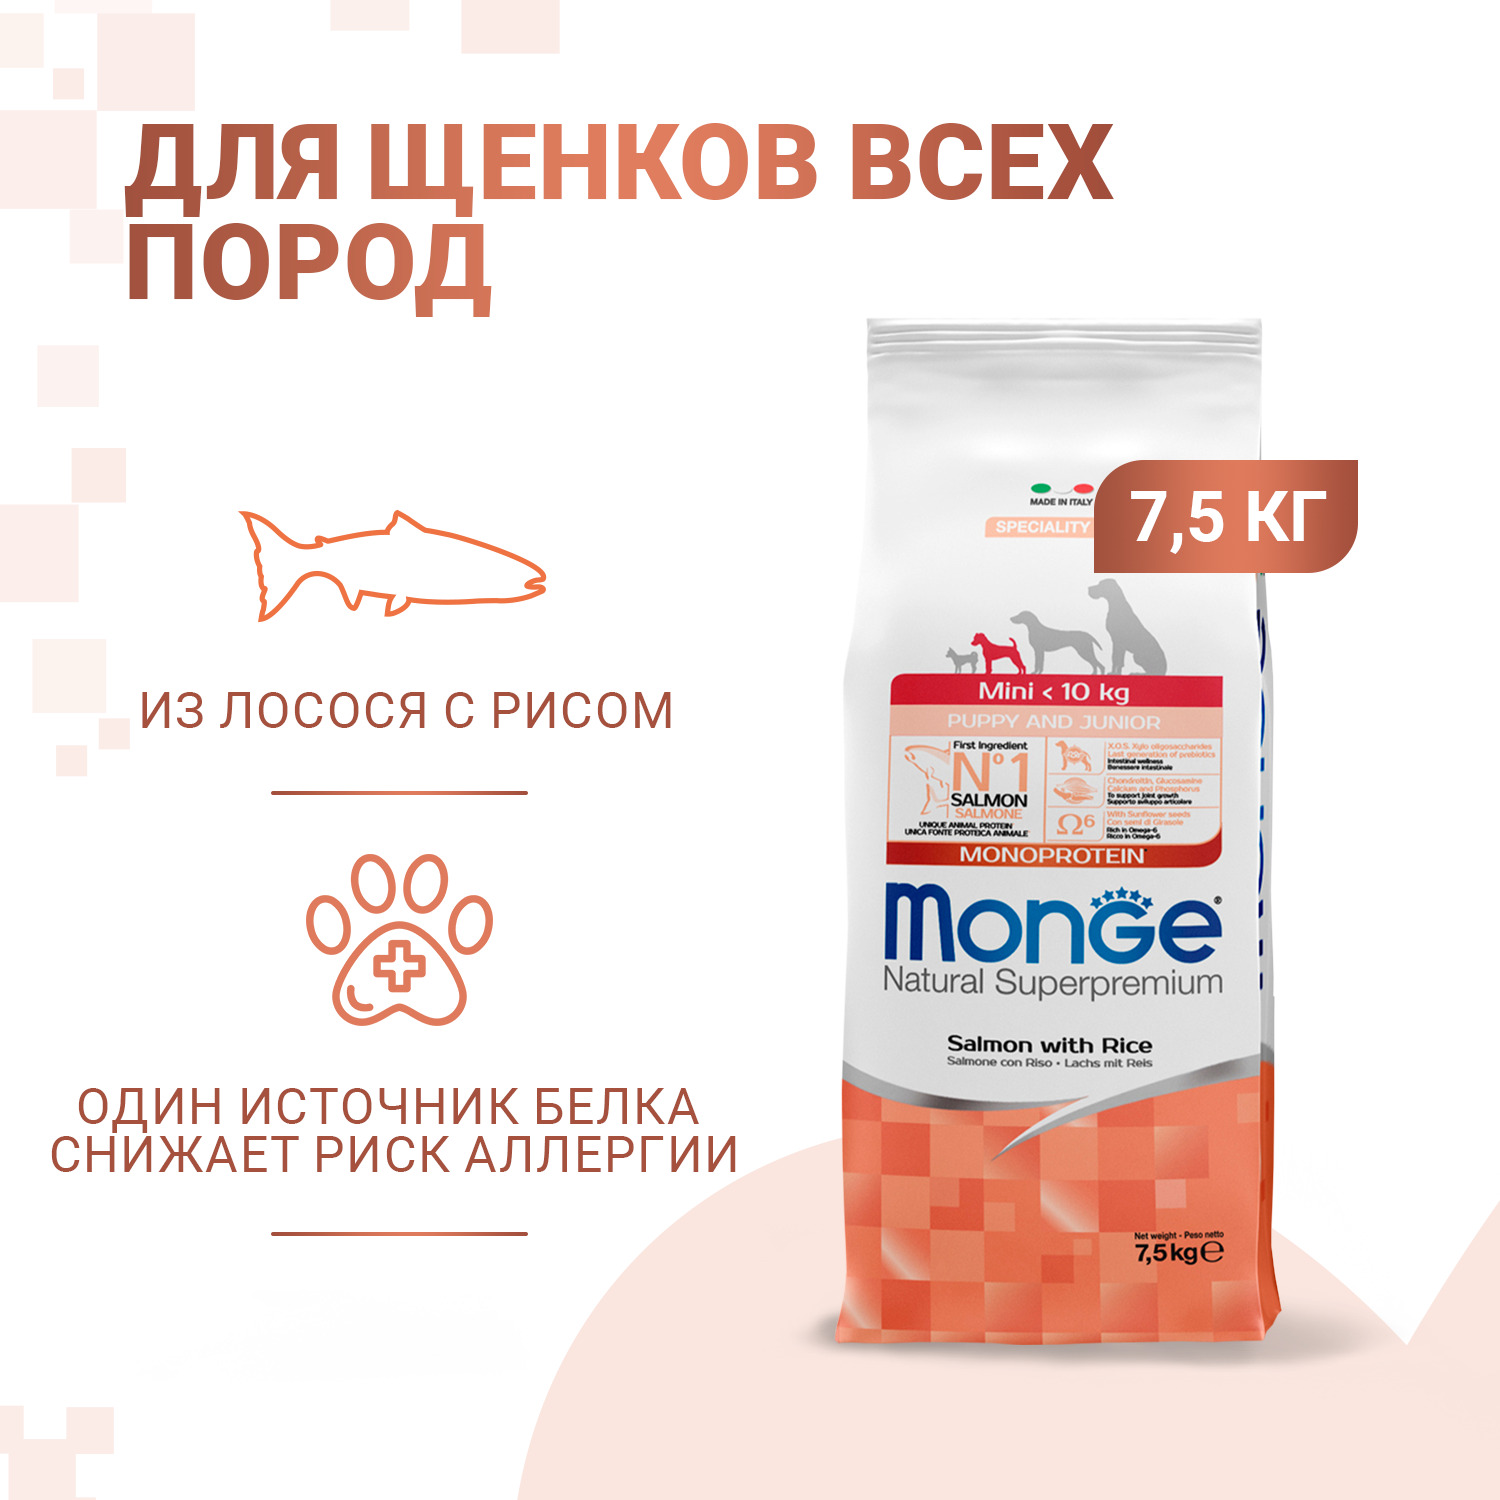 Monge Dog Speciality Line Monoprotein для щенков мелких пород лосось с рисом 7,5 кг